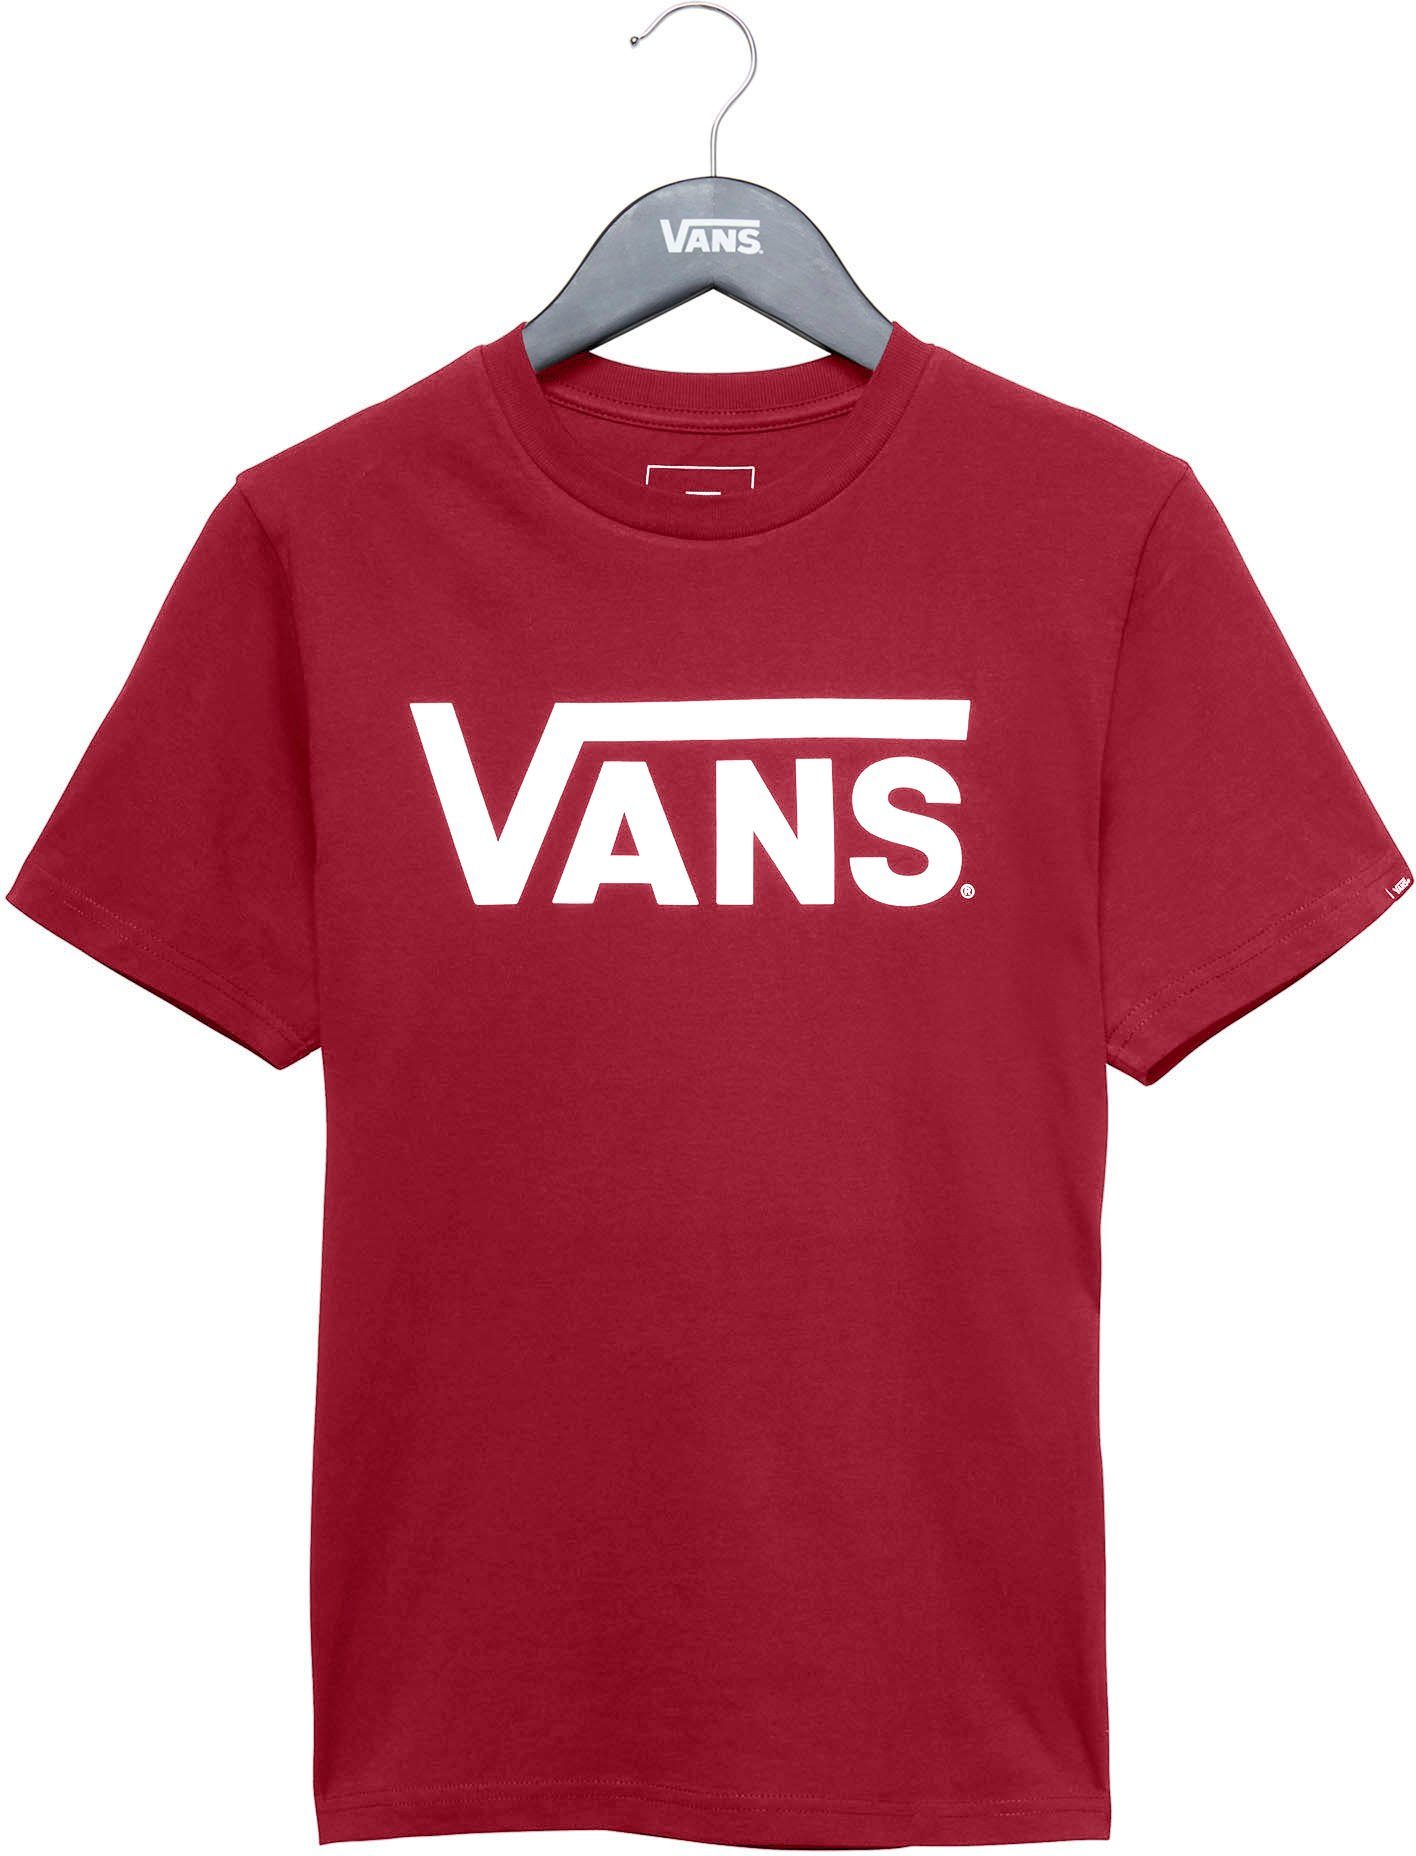 Vans T-Shirt VANS CLASSIC pepper BOYS chili